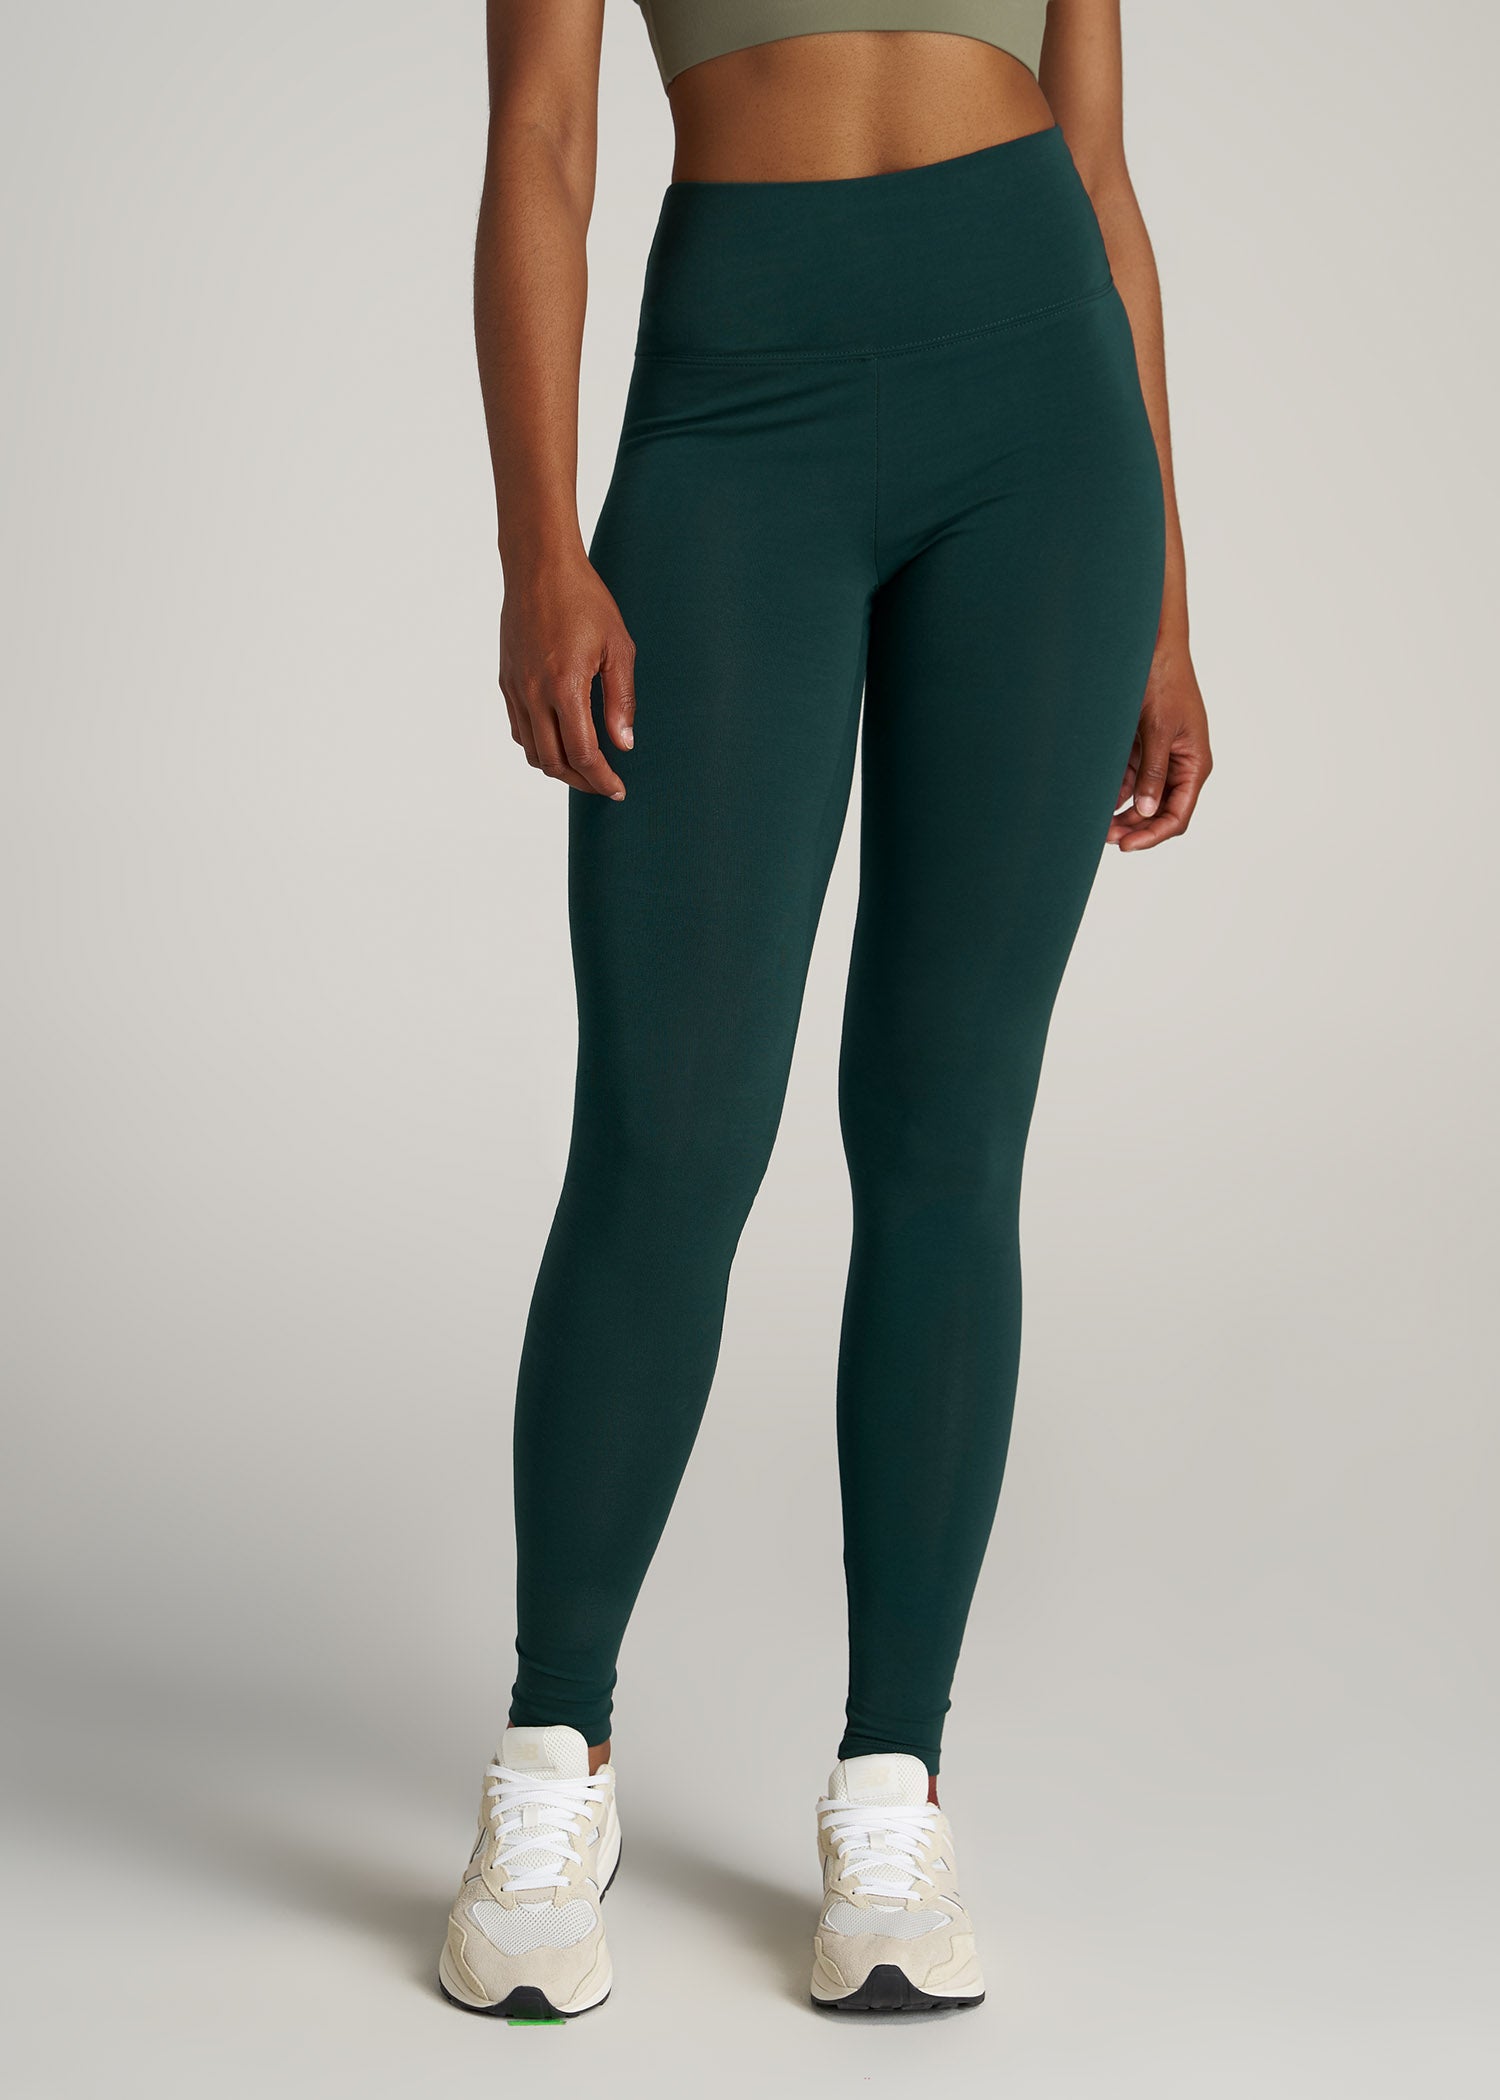 Women's Tall Cotton Leggings Emerald | American Tall